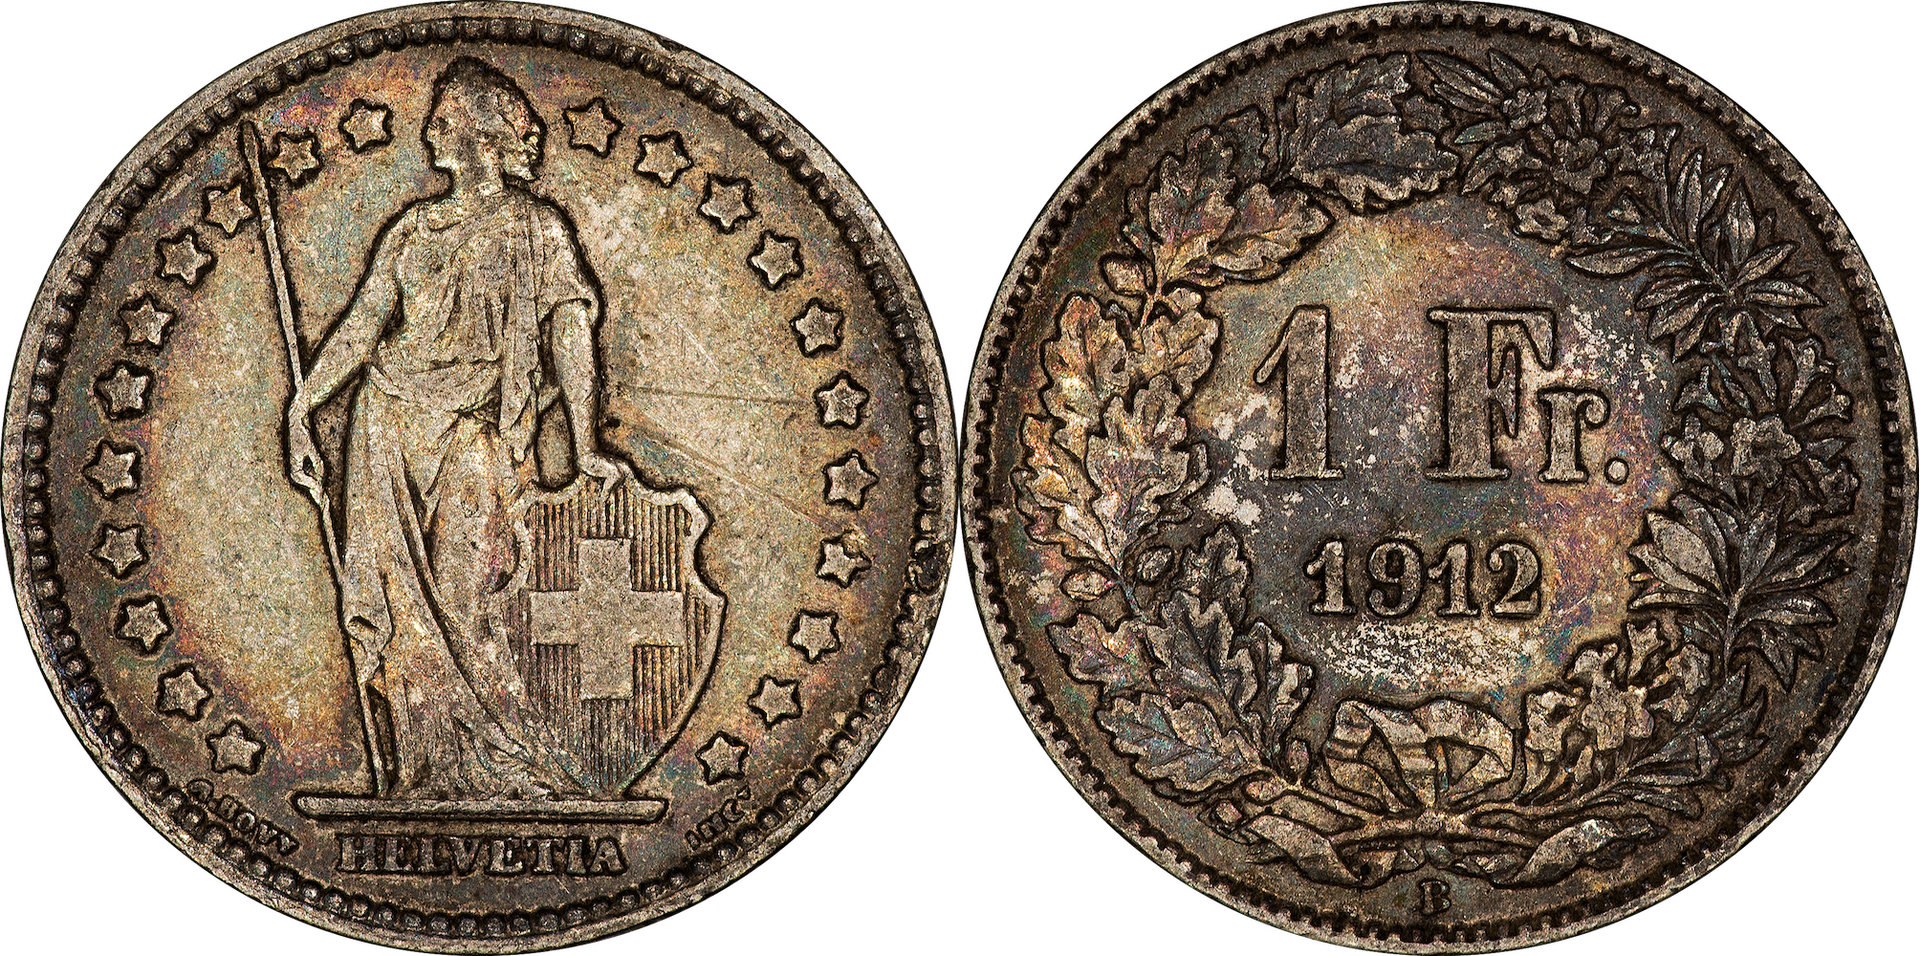 Switzerland - 1912 B 1 Franc.jpg